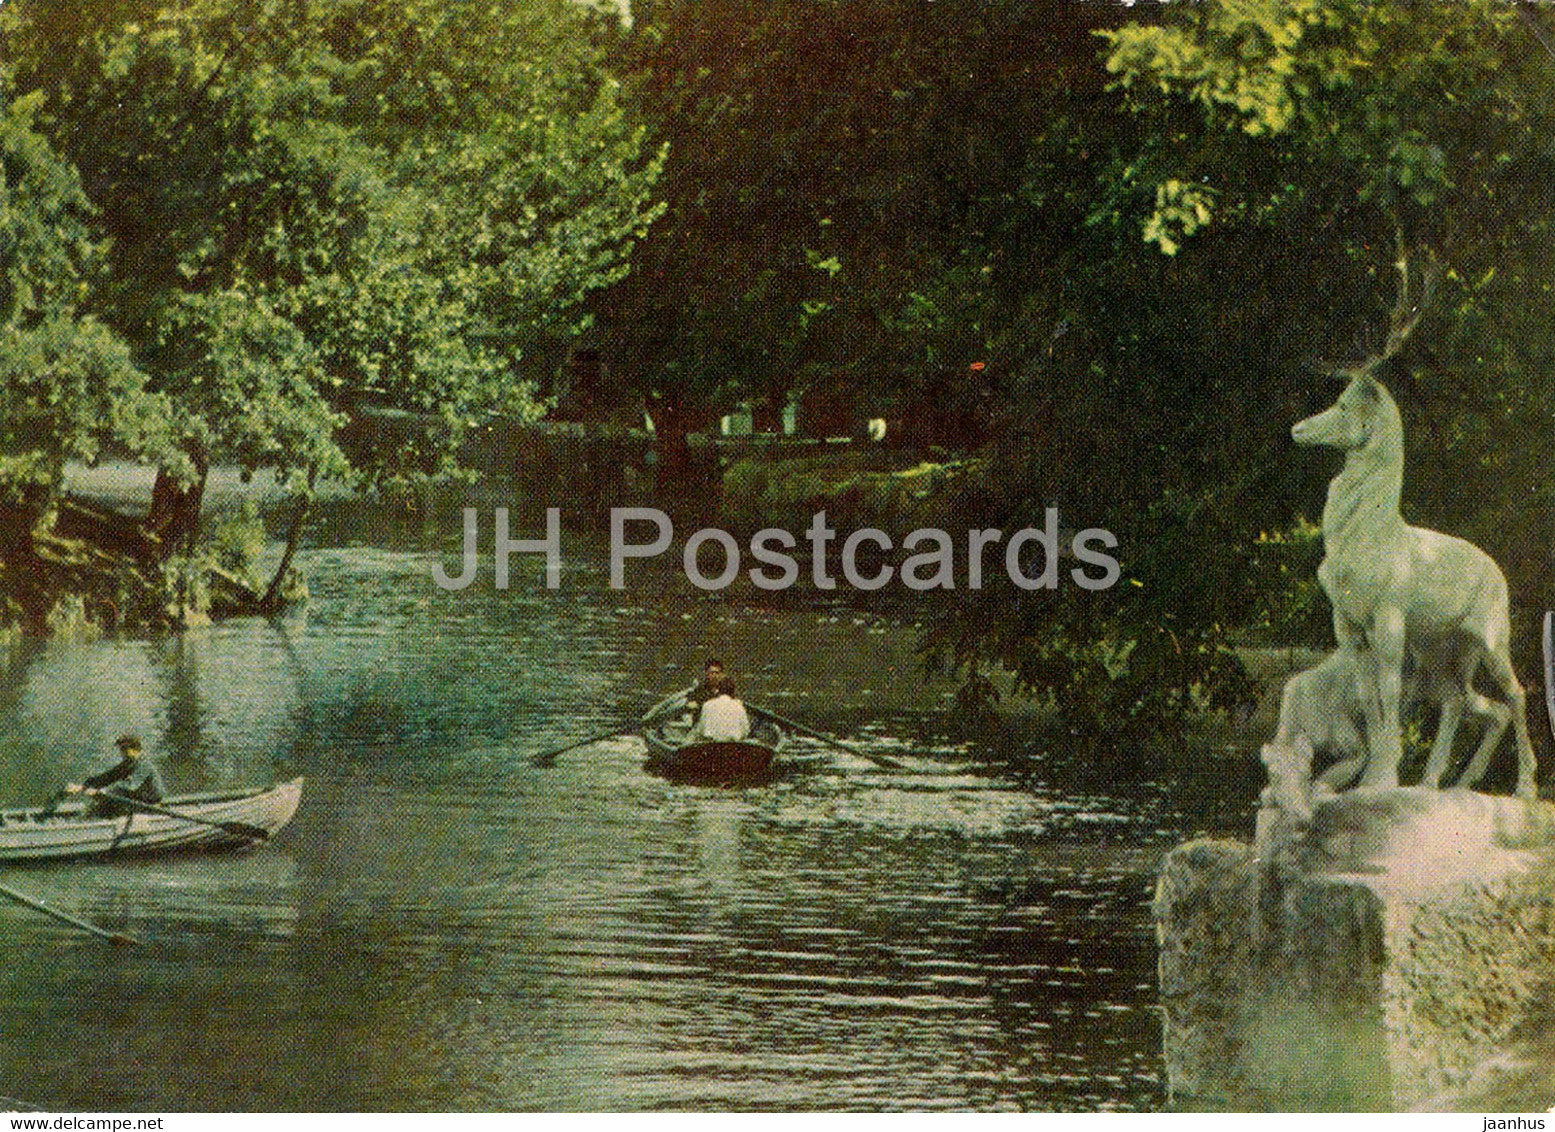 Saratov - City Park - 1965 - Russia USSR - used - JH Postcards